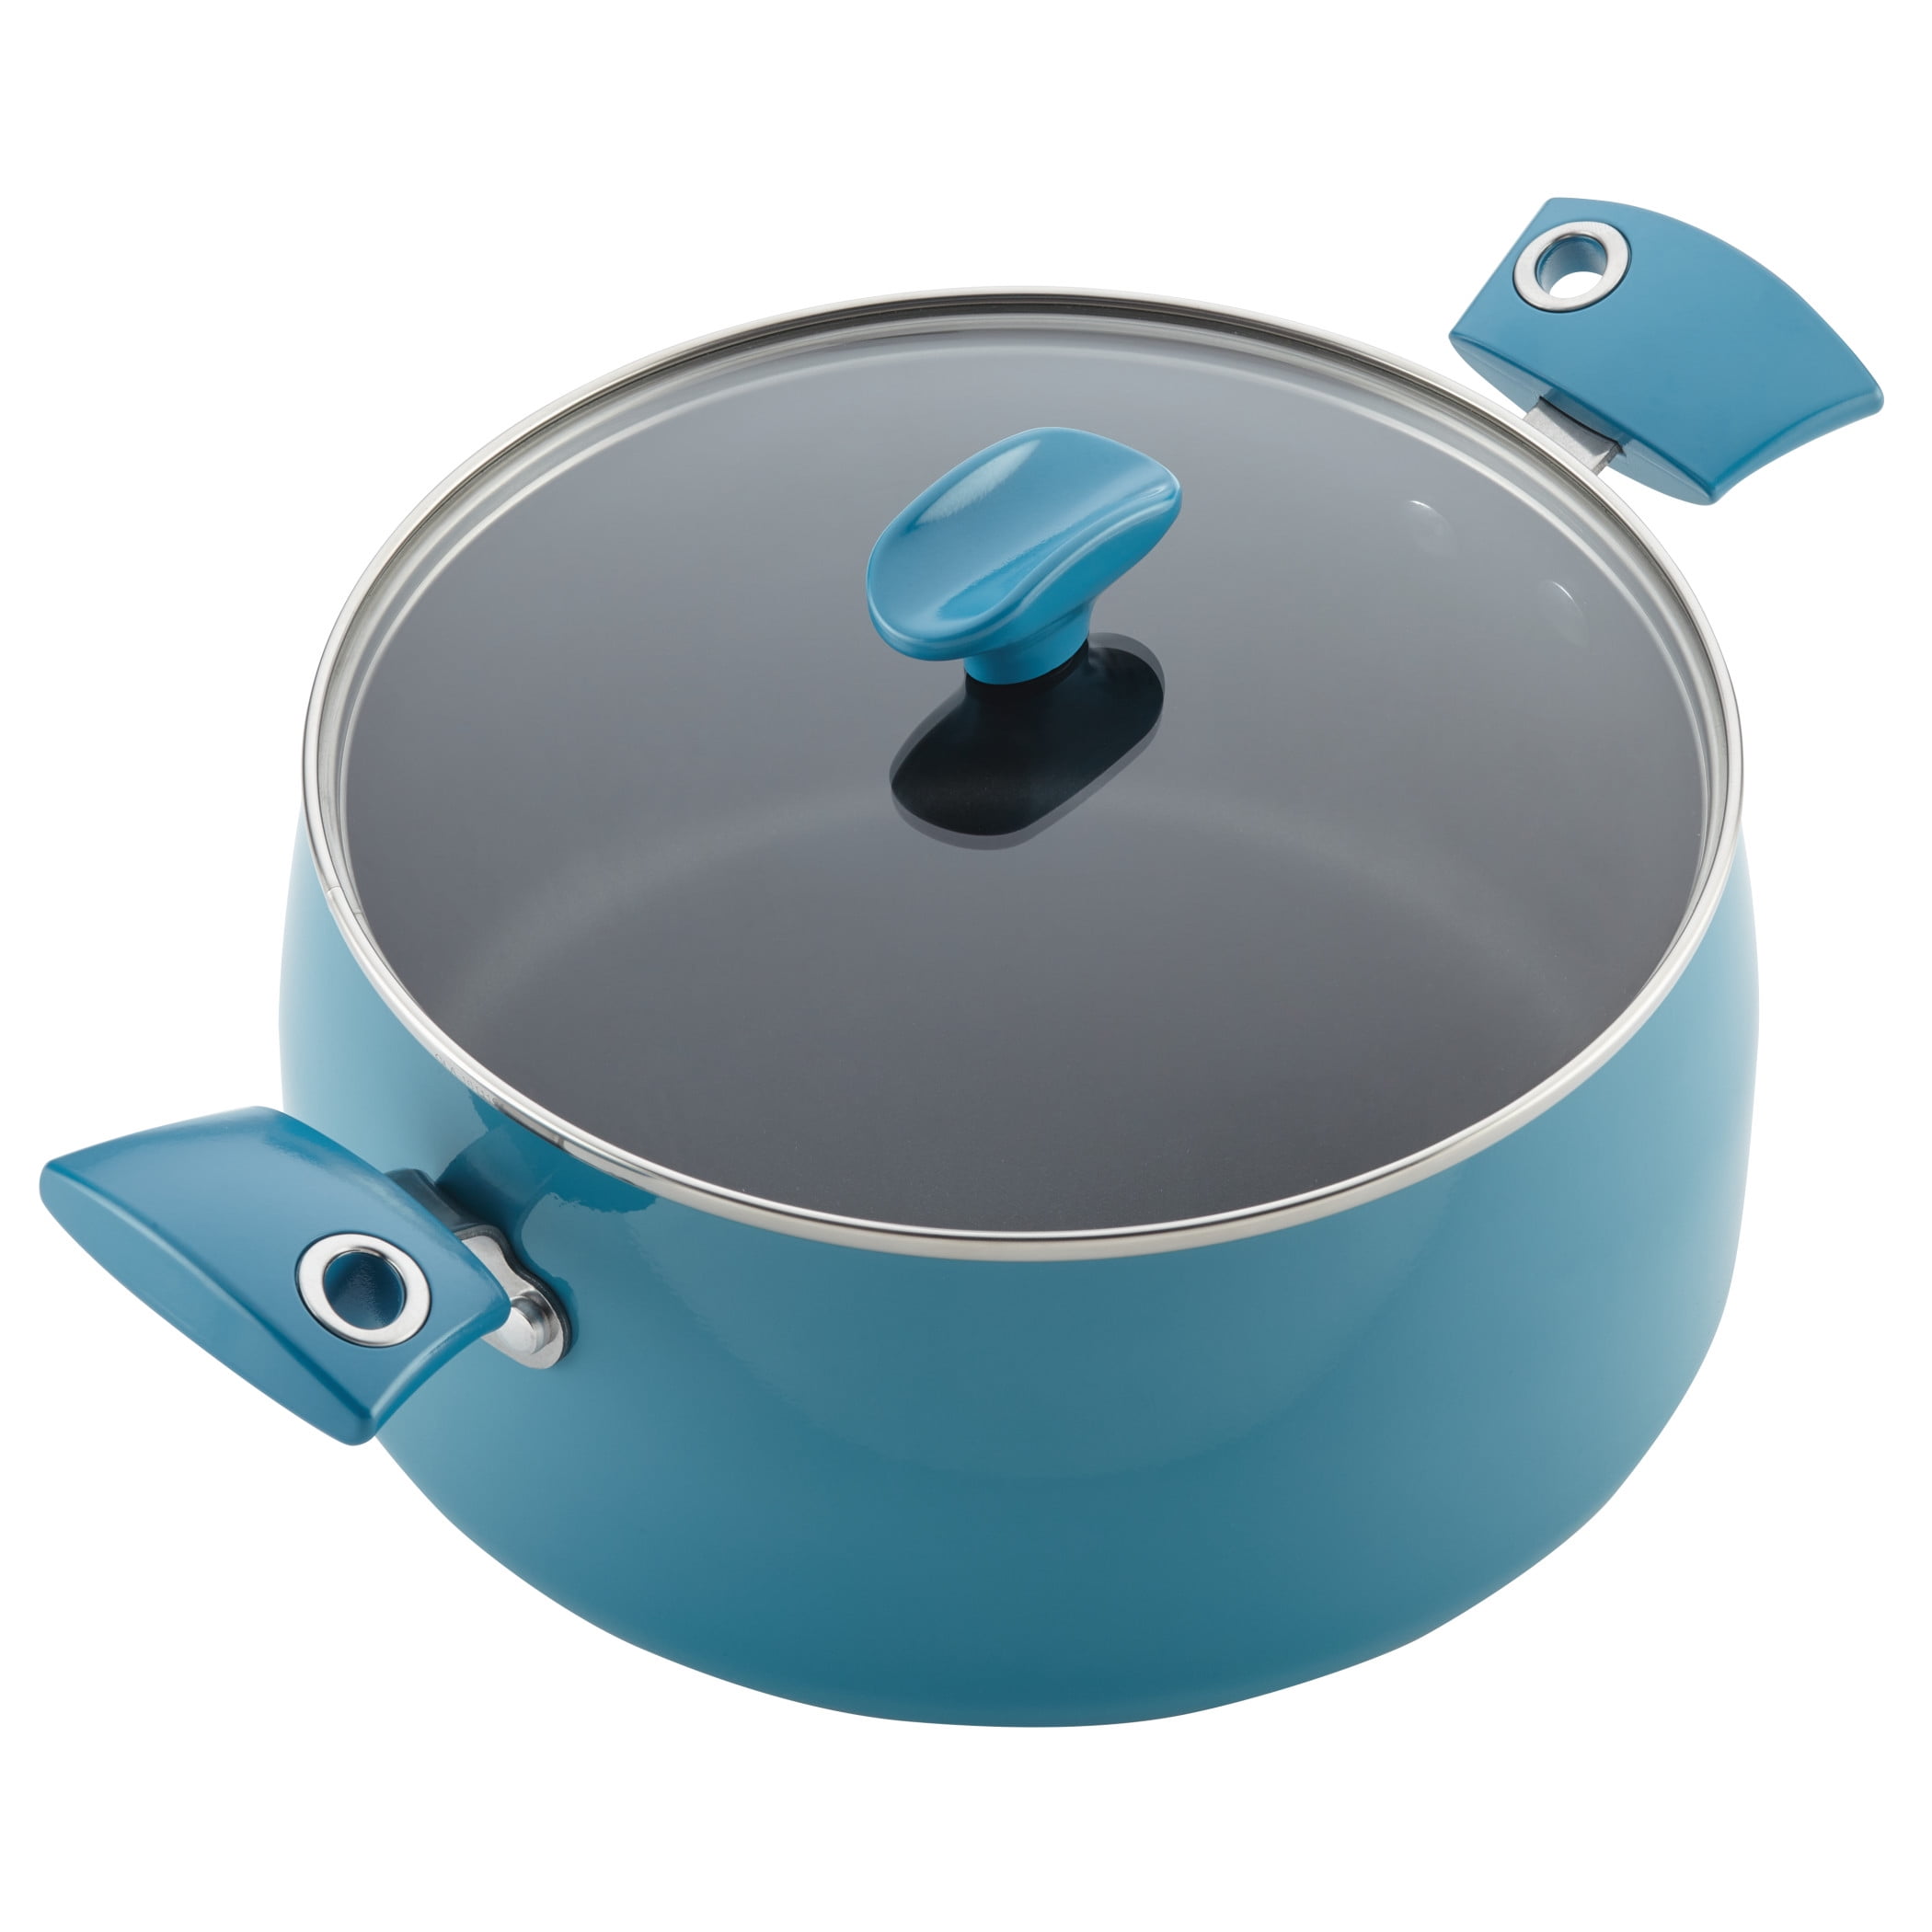 Rachael Ray Create Delicious Nonstick Cookware Set - Gray/Light Blue, 11 pc  - Gerbes Super Markets